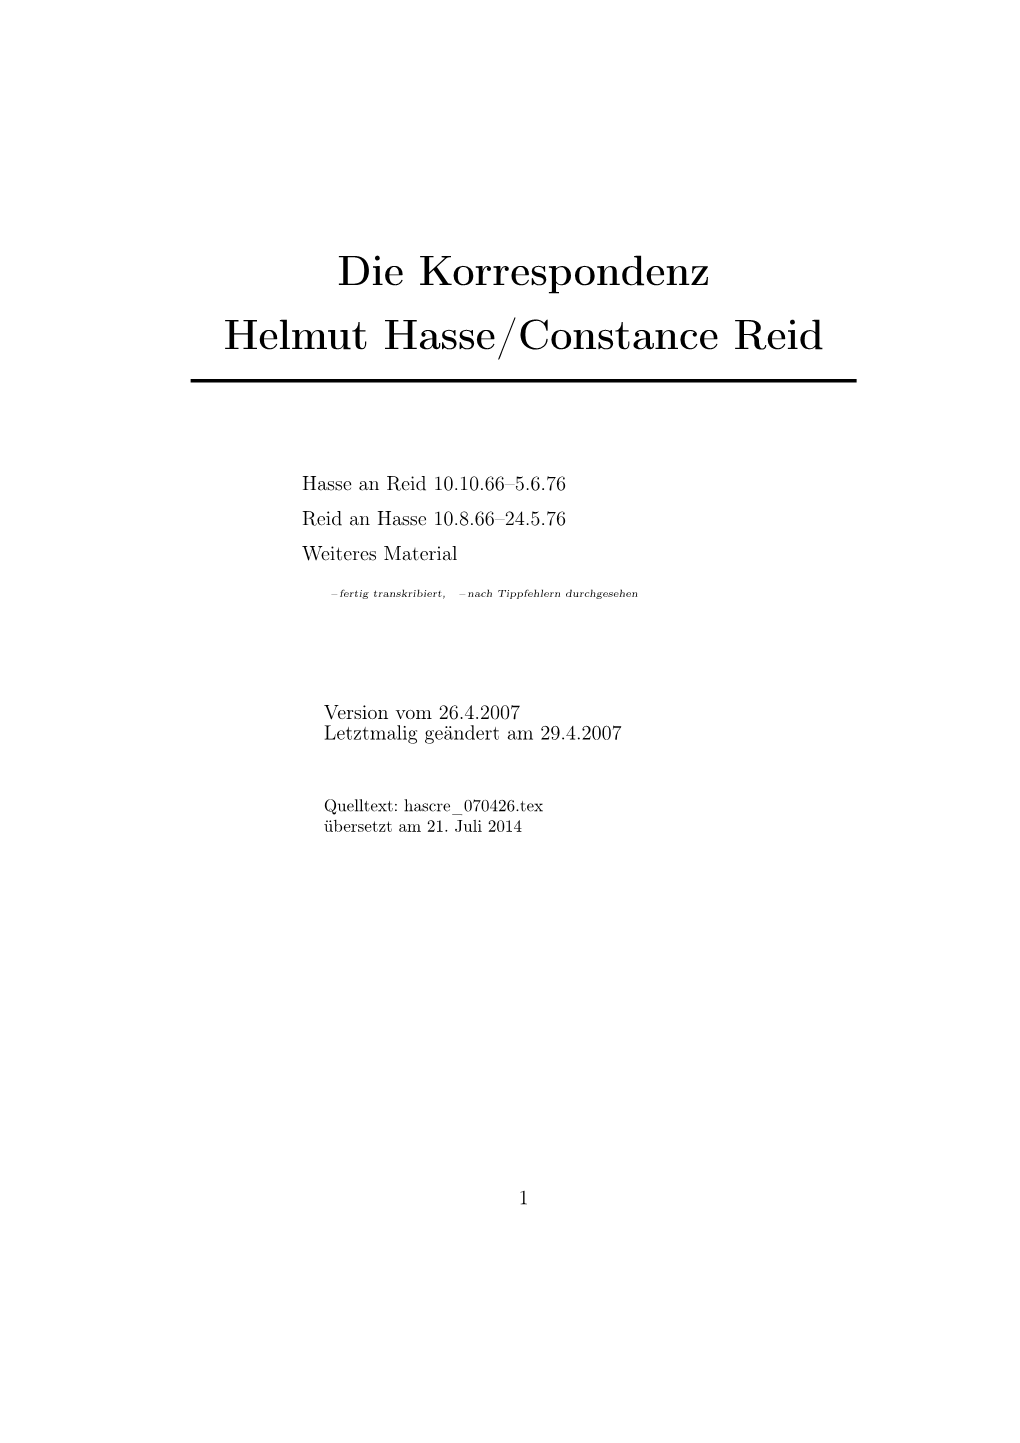 Die Korrespondenz Helmut Hasse/Constance Reid